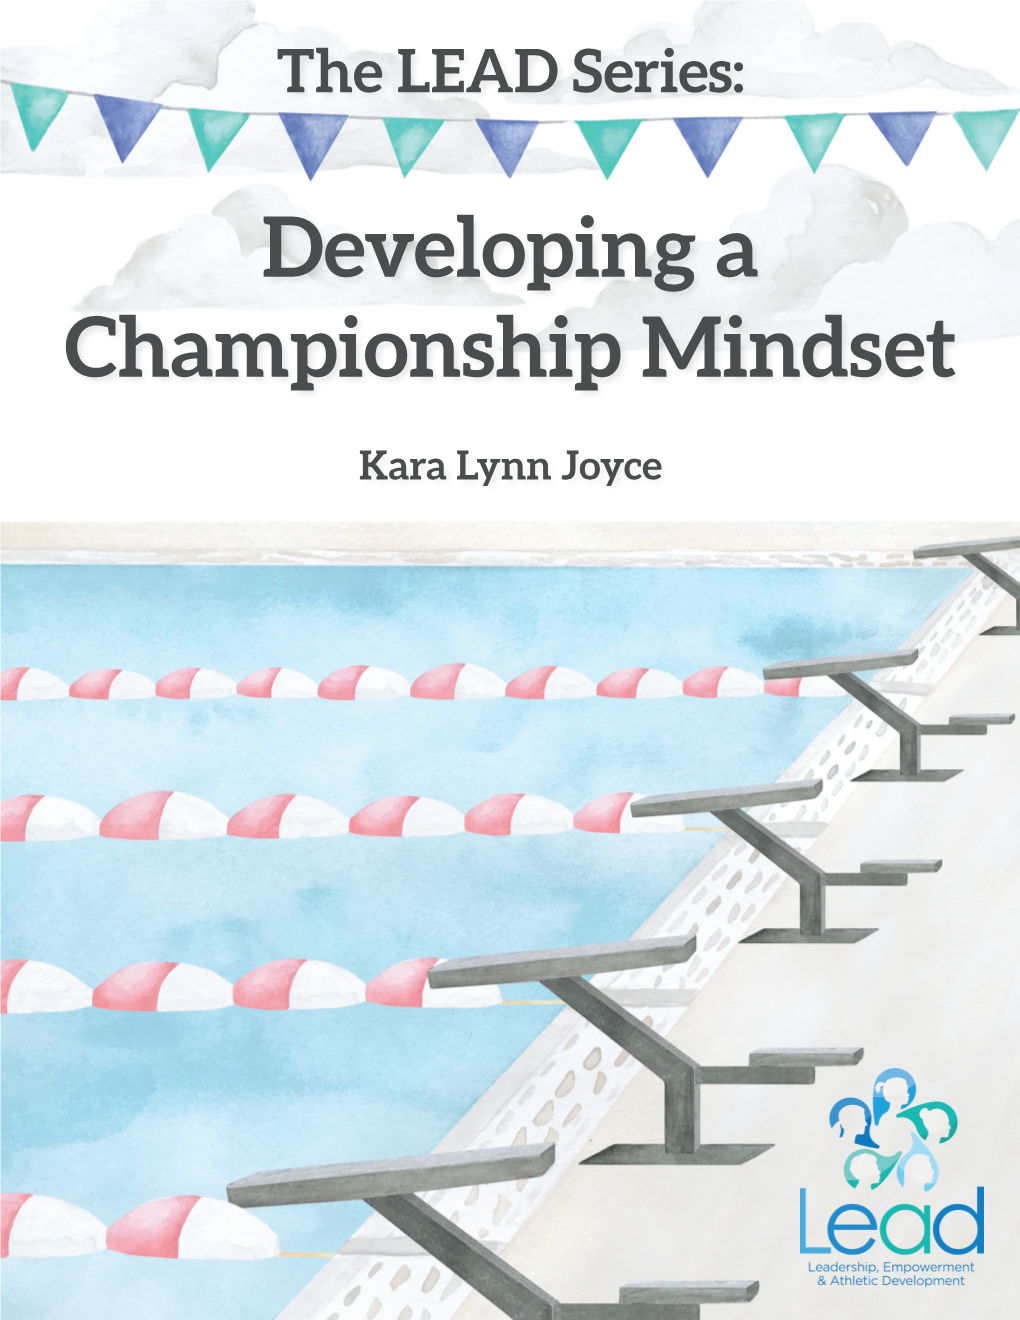 Developing a Championship Mindset – Kara Lynn Joyce